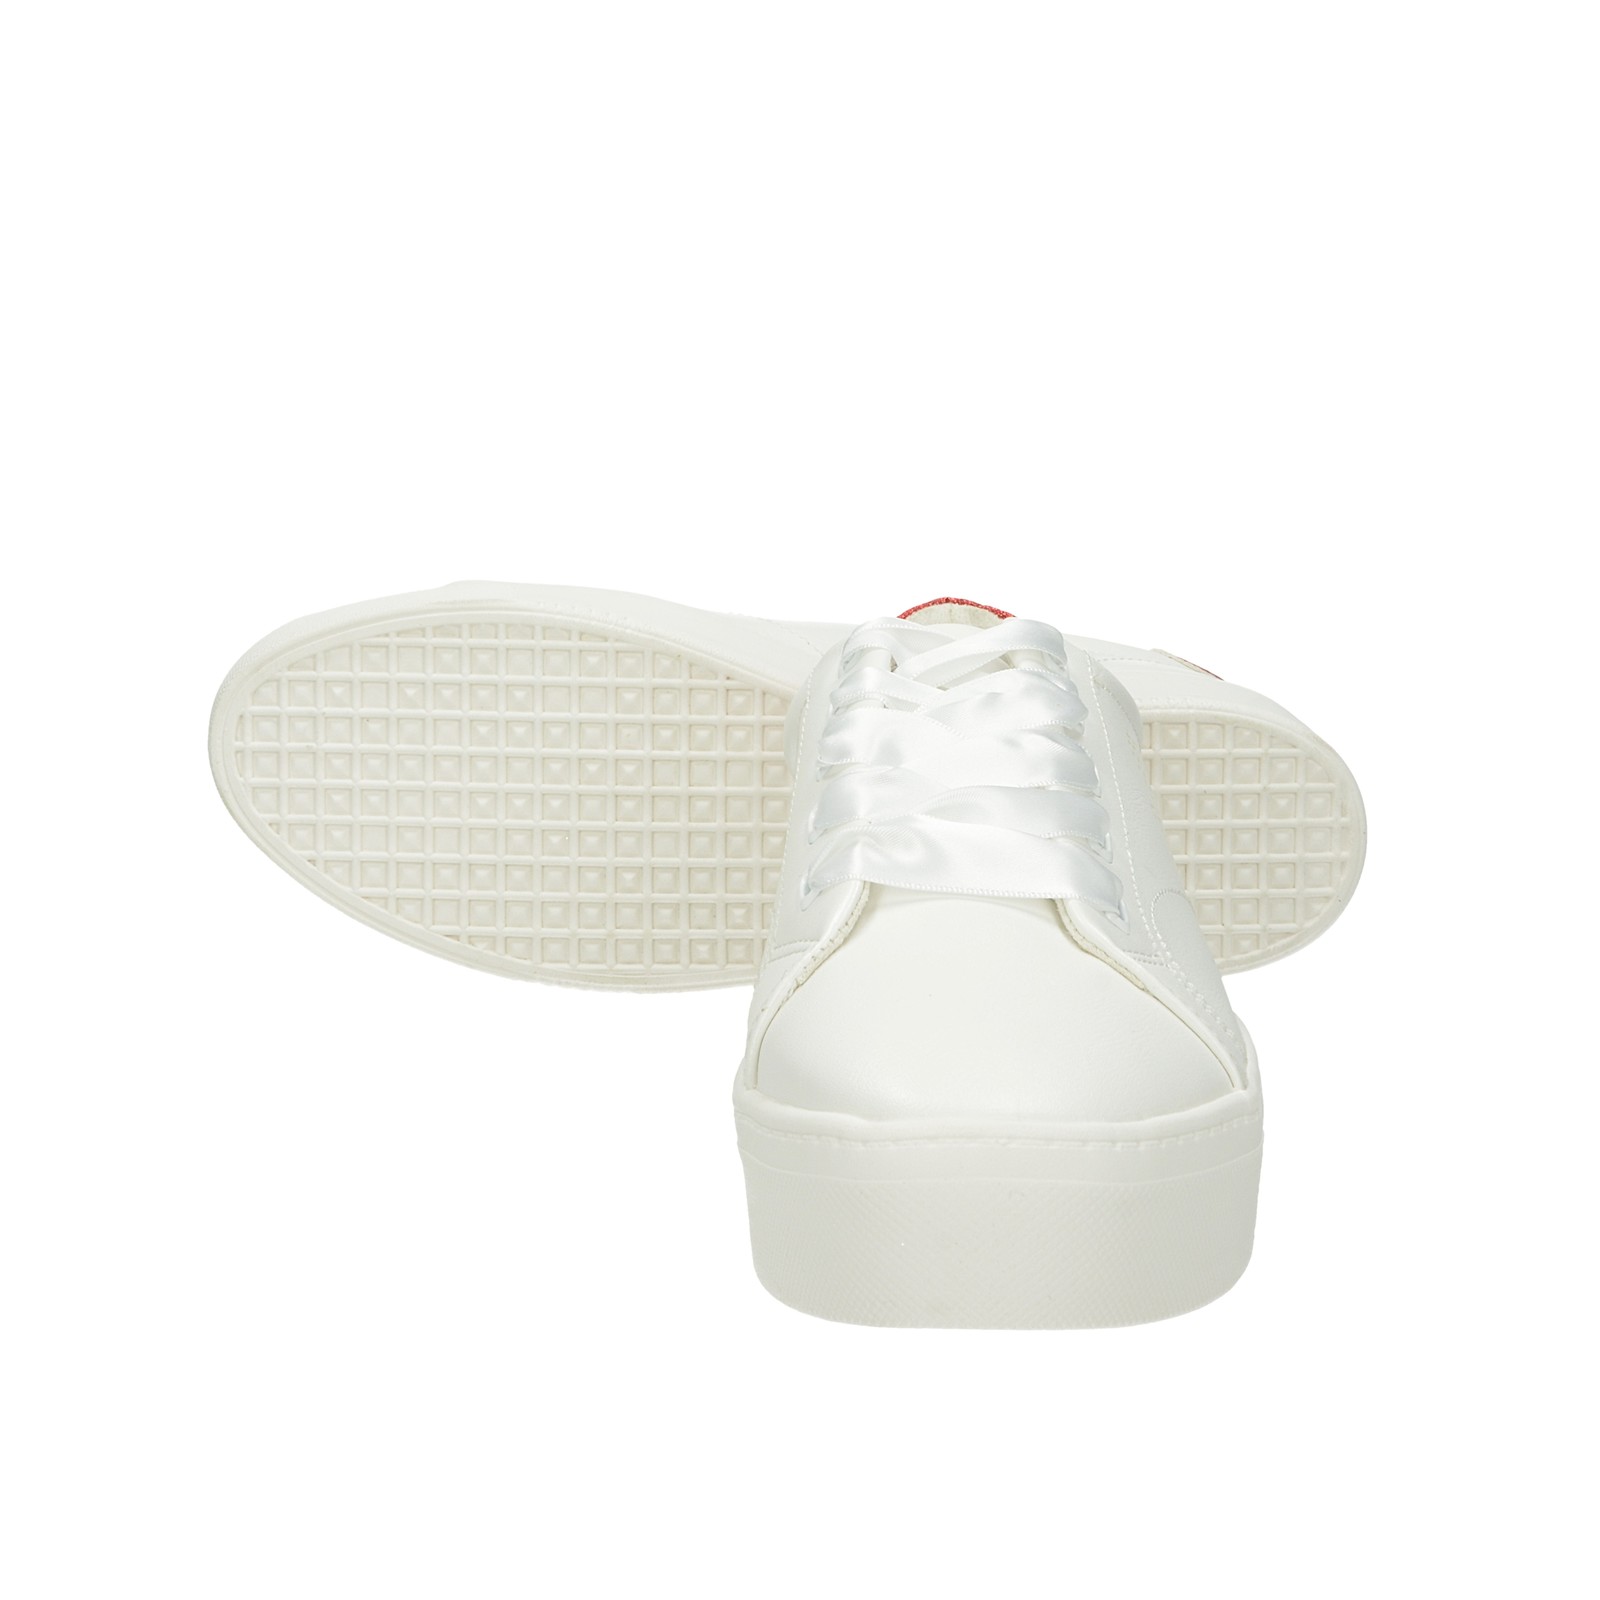 Giftig begroting twist s.Oliver women´s comfortable platform sneakers - white | Robel.shoes